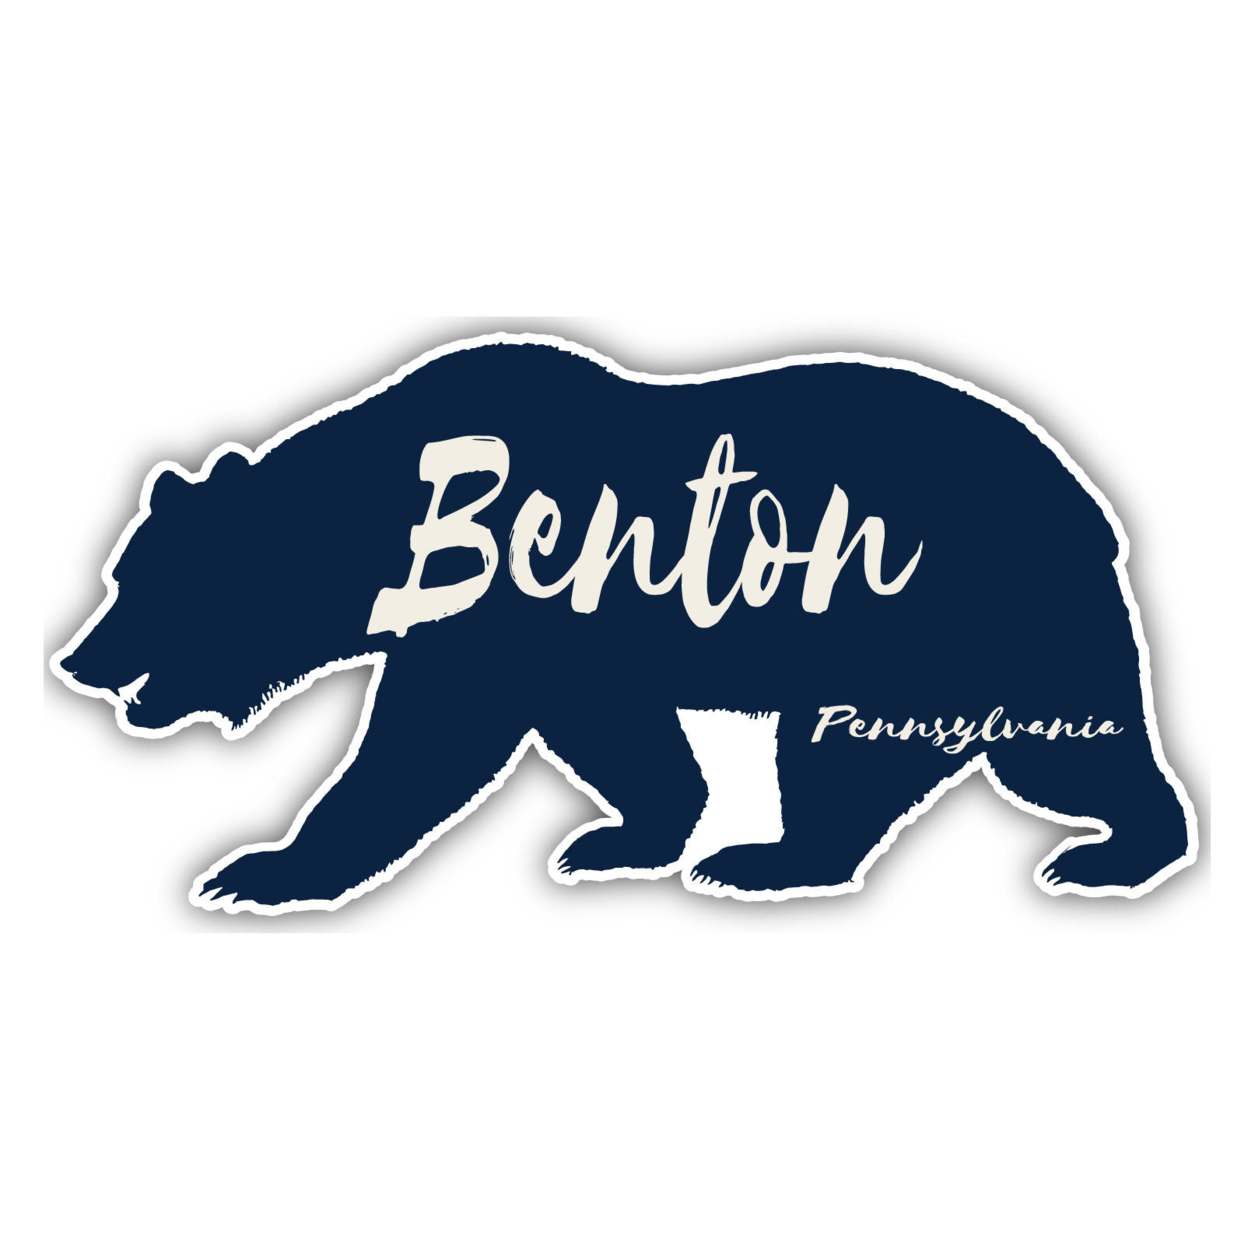 Benton Pennsylvania Souvenir Decorative Stickers (Choose Theme And Size) - 4-Pack, 6-Inch, Bear